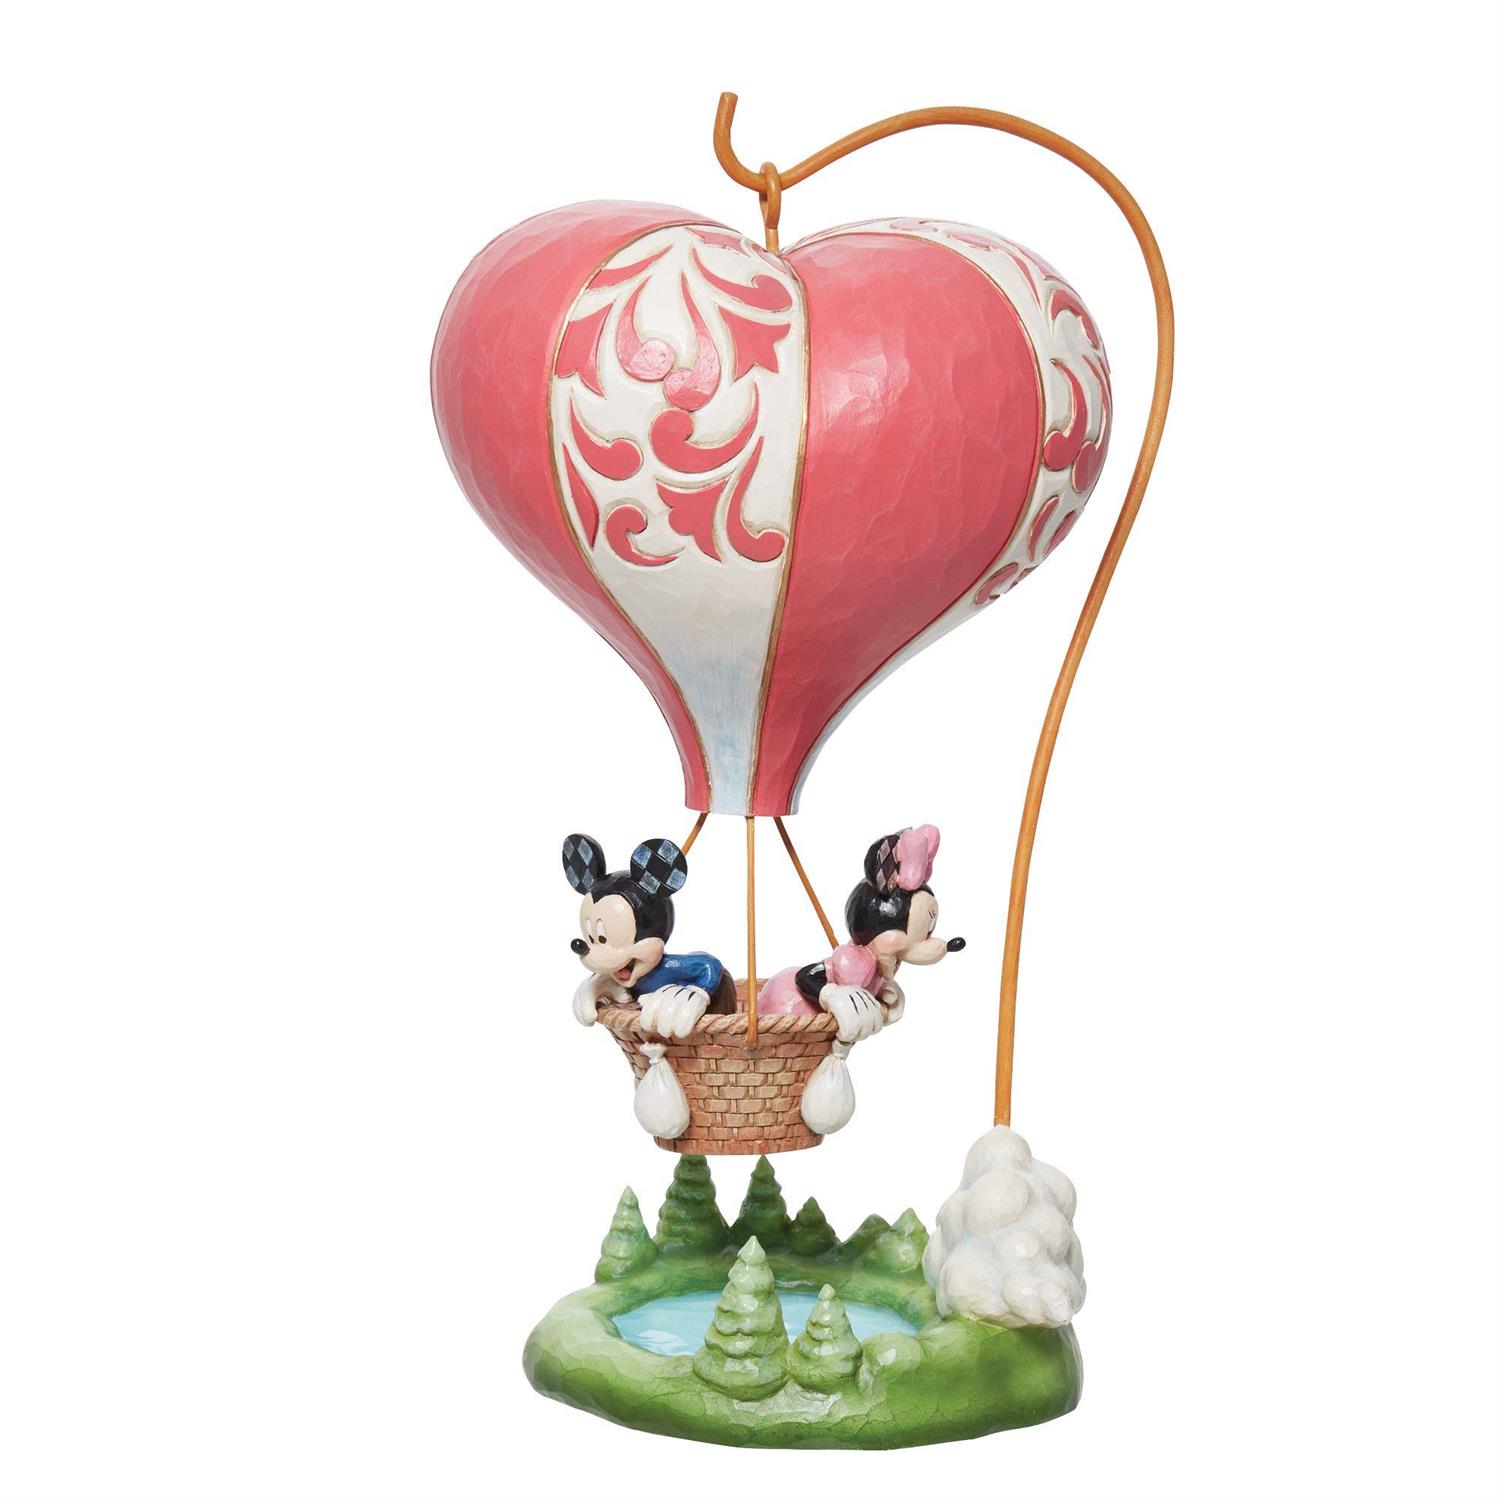 Jim Shore Disney Traditions Mickey Minnie in Hot Air Balloon 